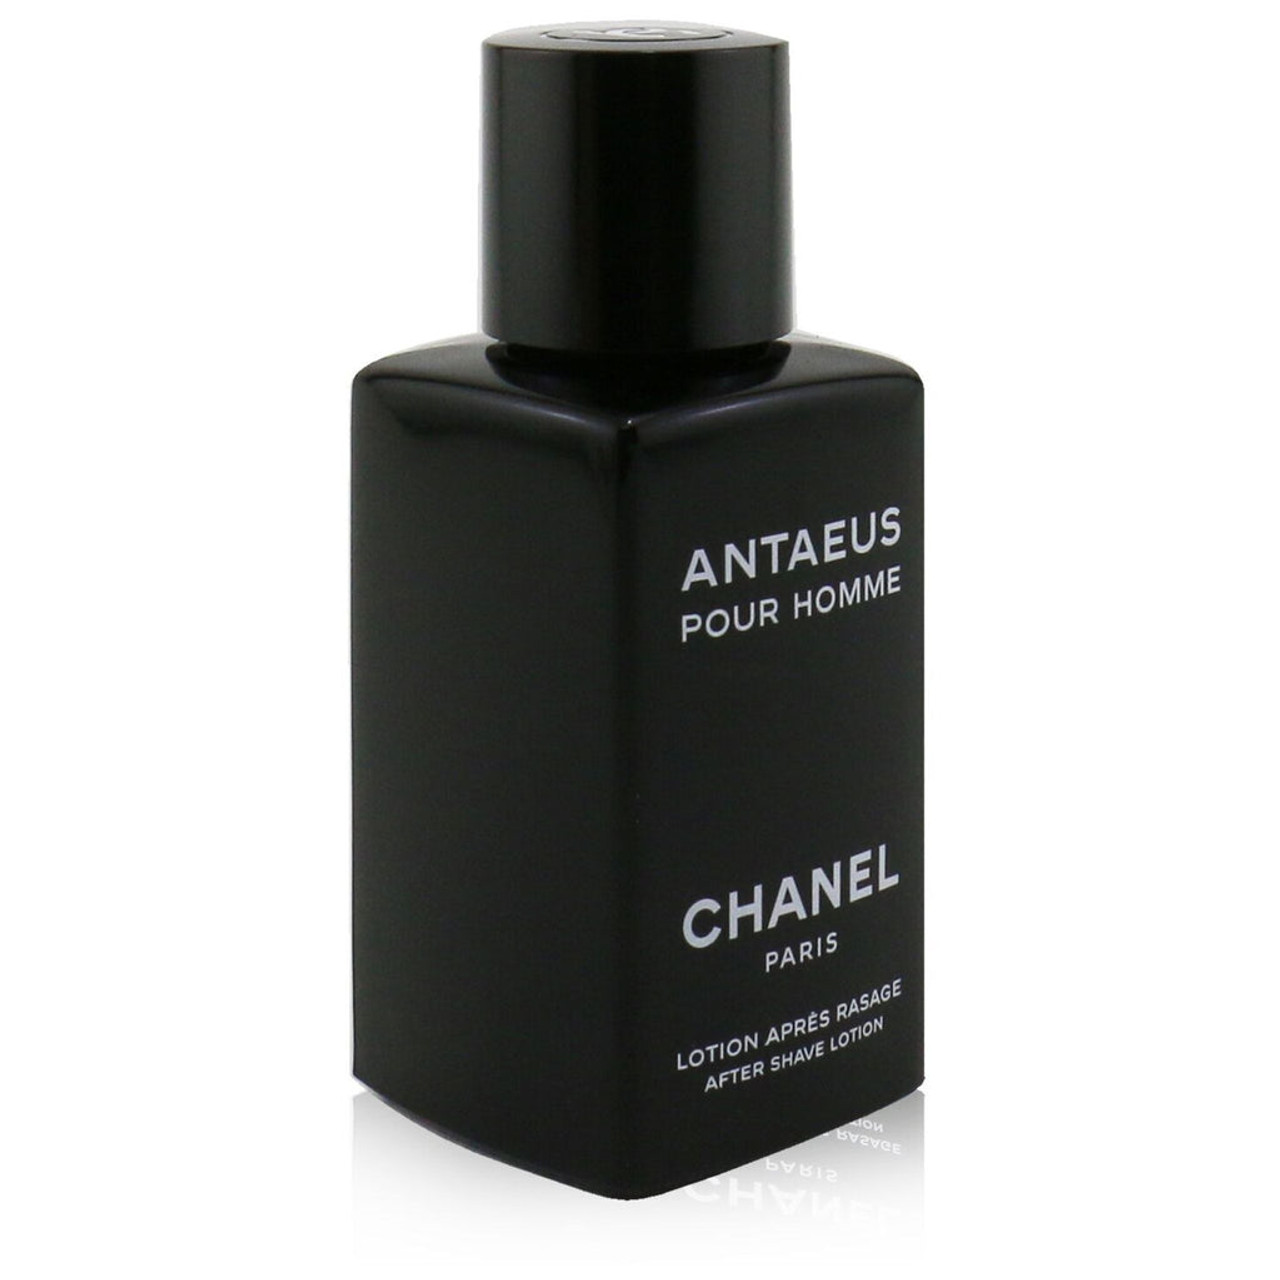 Allure Men's Fragrances for sale